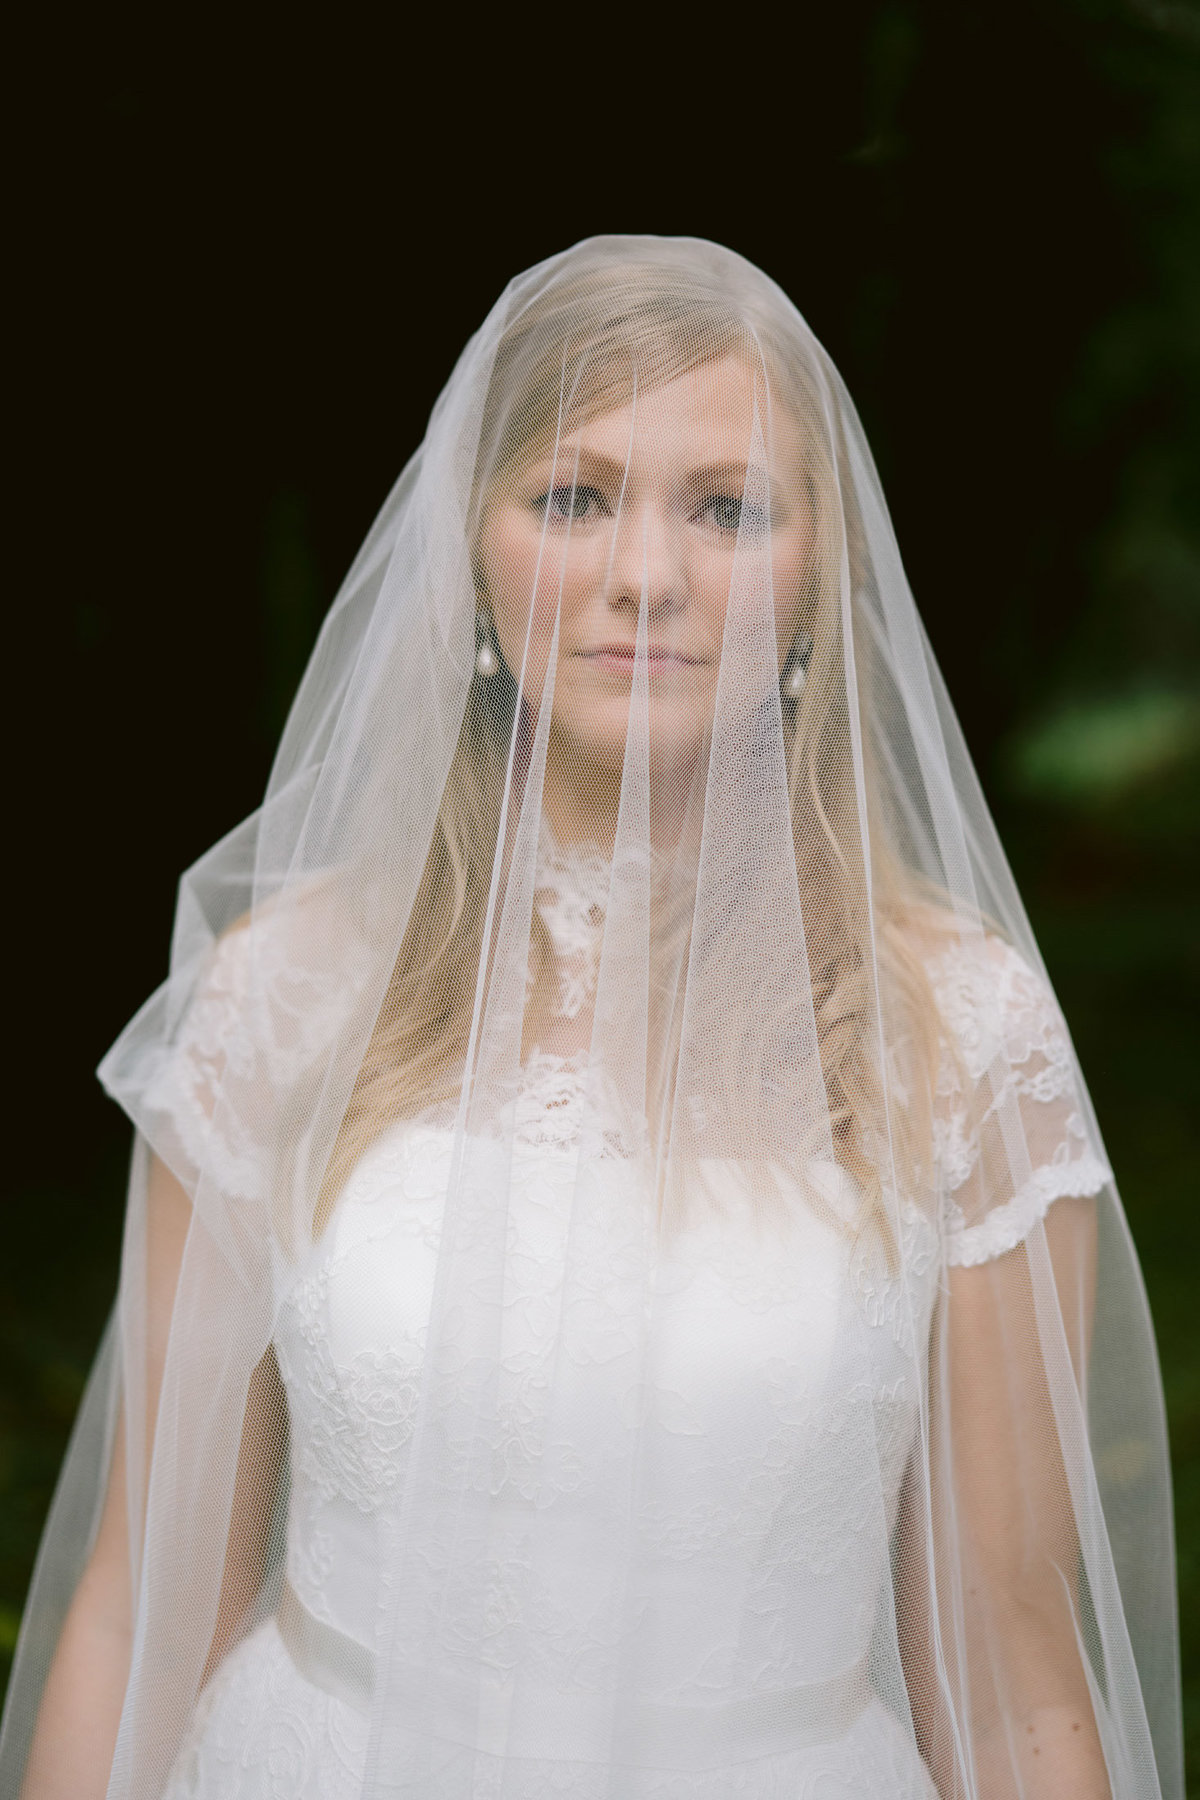 a portrait of the bride weraring her wedding veil